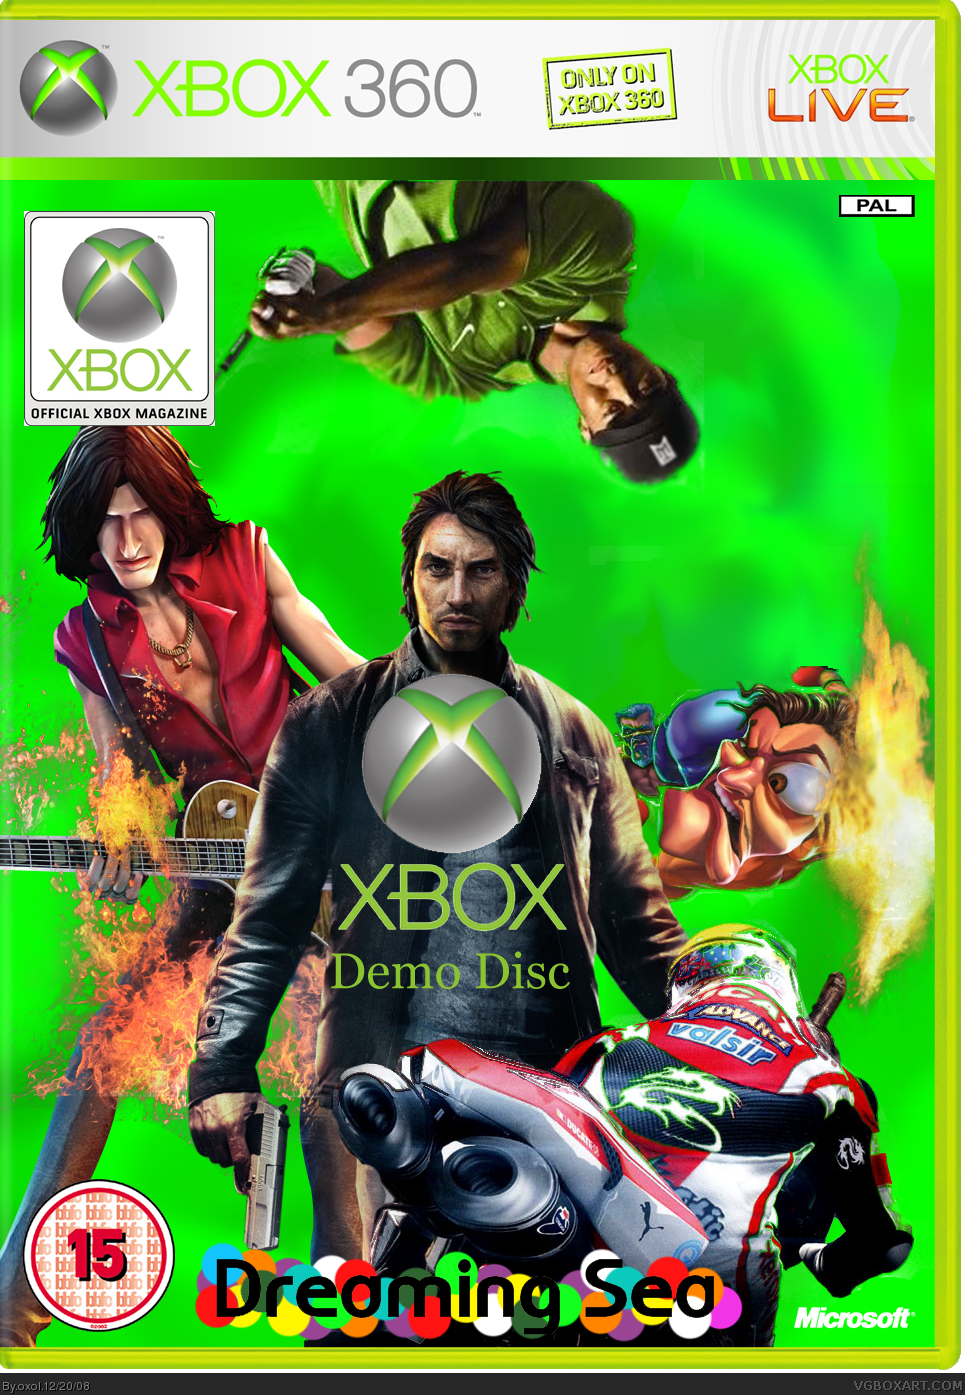 Official Xbox Magazine box cover